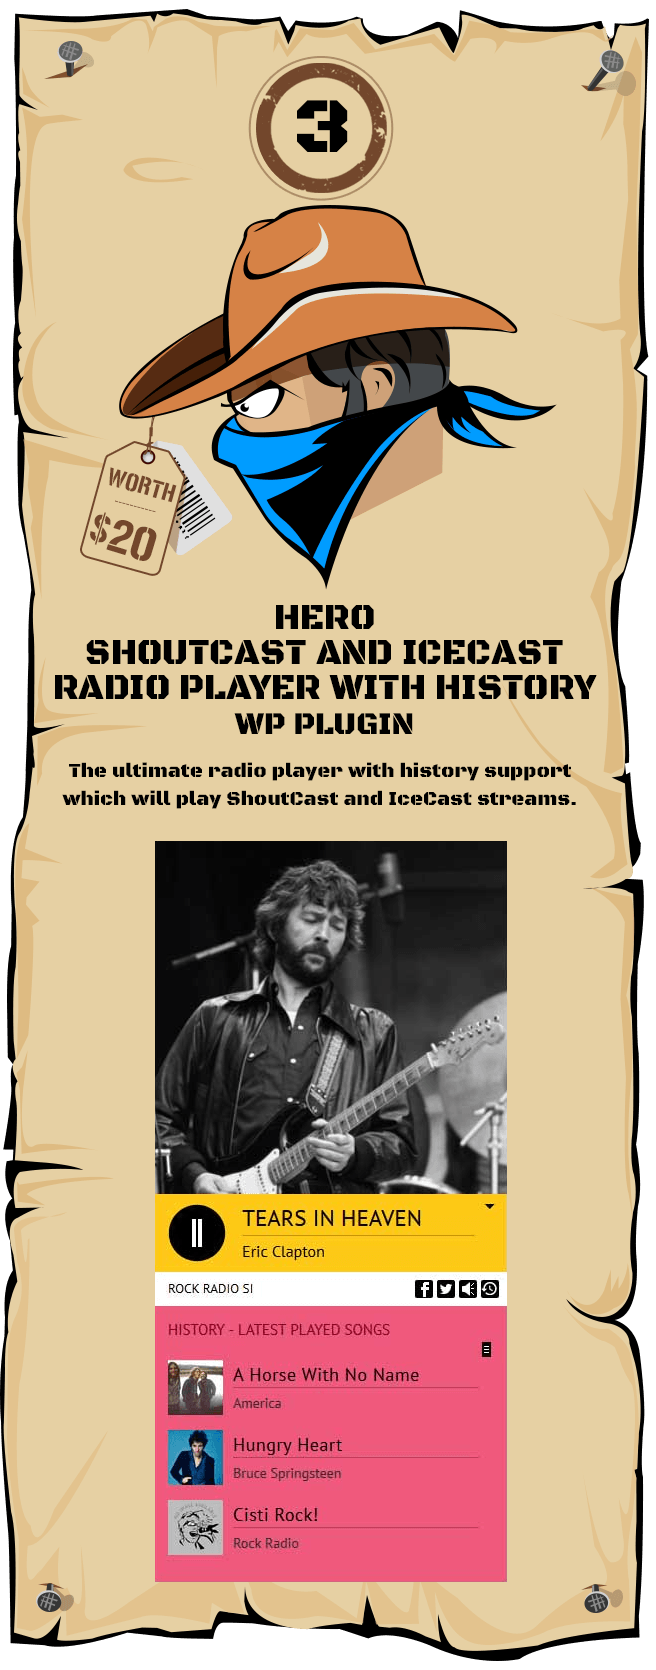 Hero - Shoutcast and Icecast Radio Player With History - WordPress Plugin